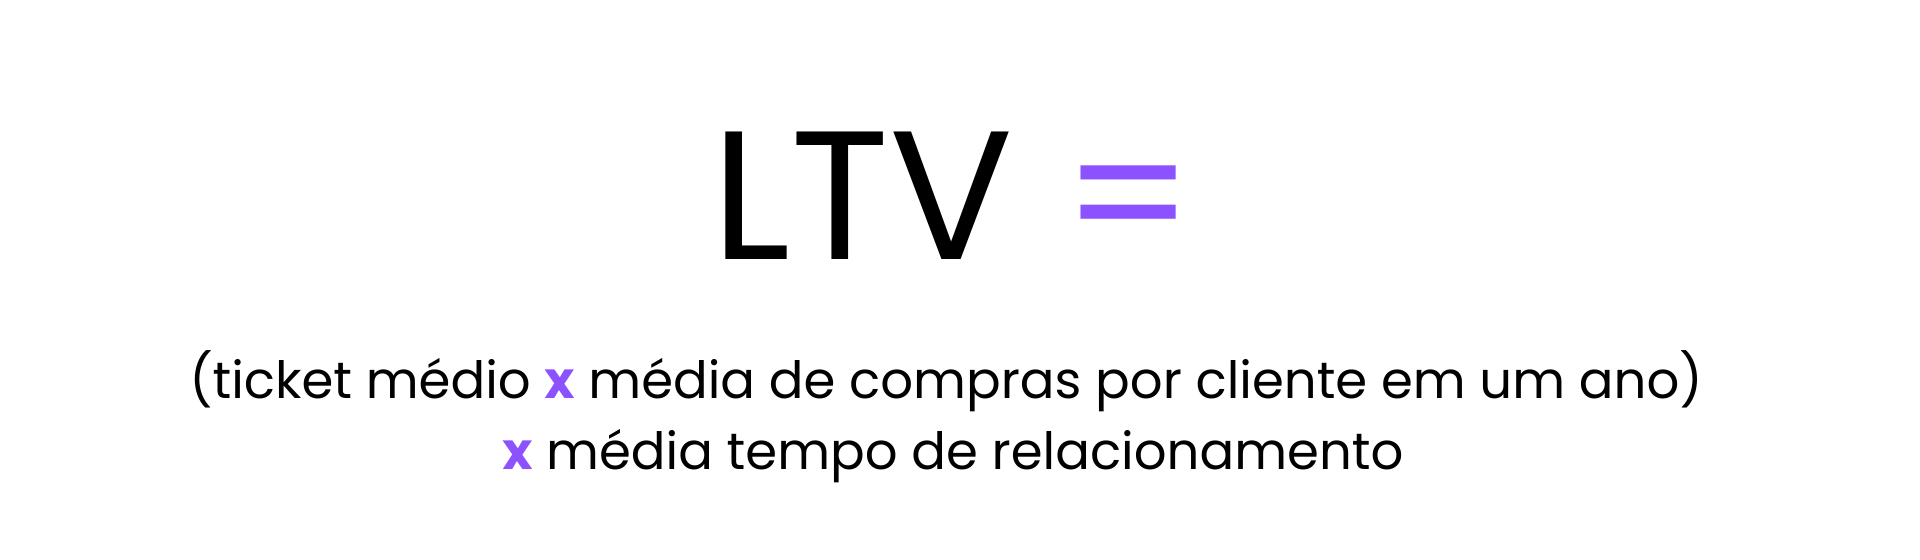 fórmula cálculo sobre ltv / lifetime value / cliente